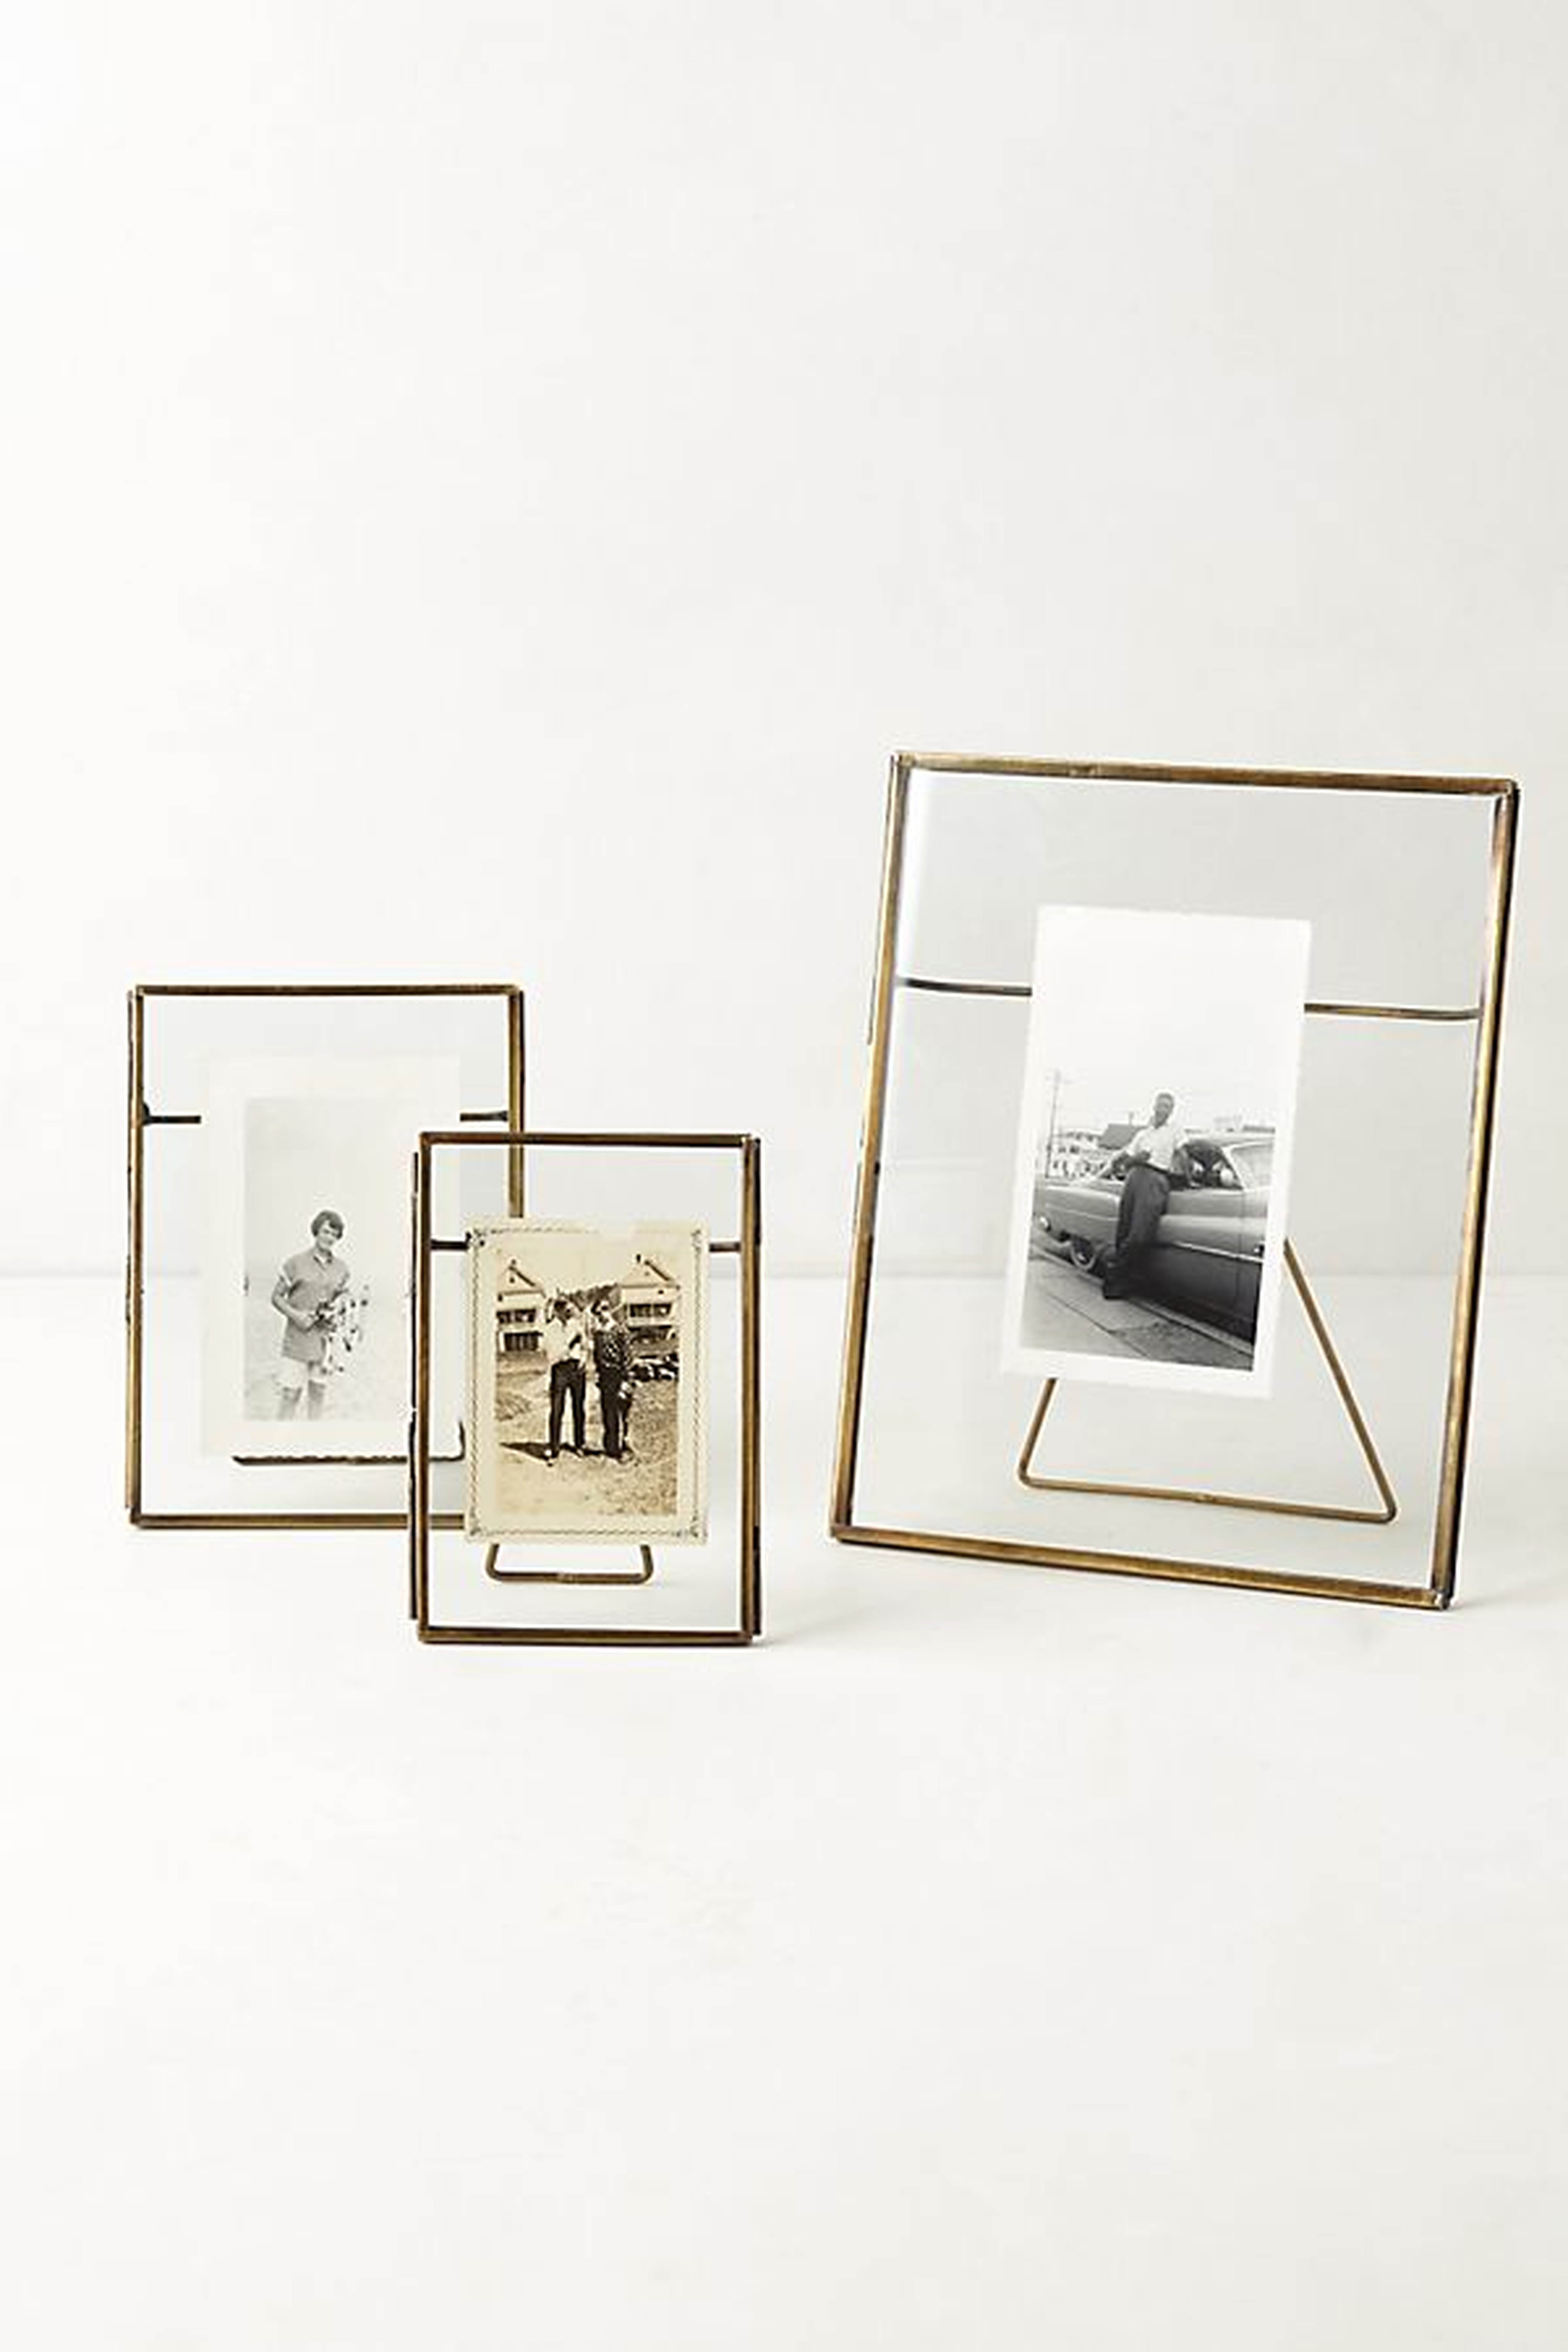 Pressed Glass photo frame 5" x 7" Brass - Anthropologie